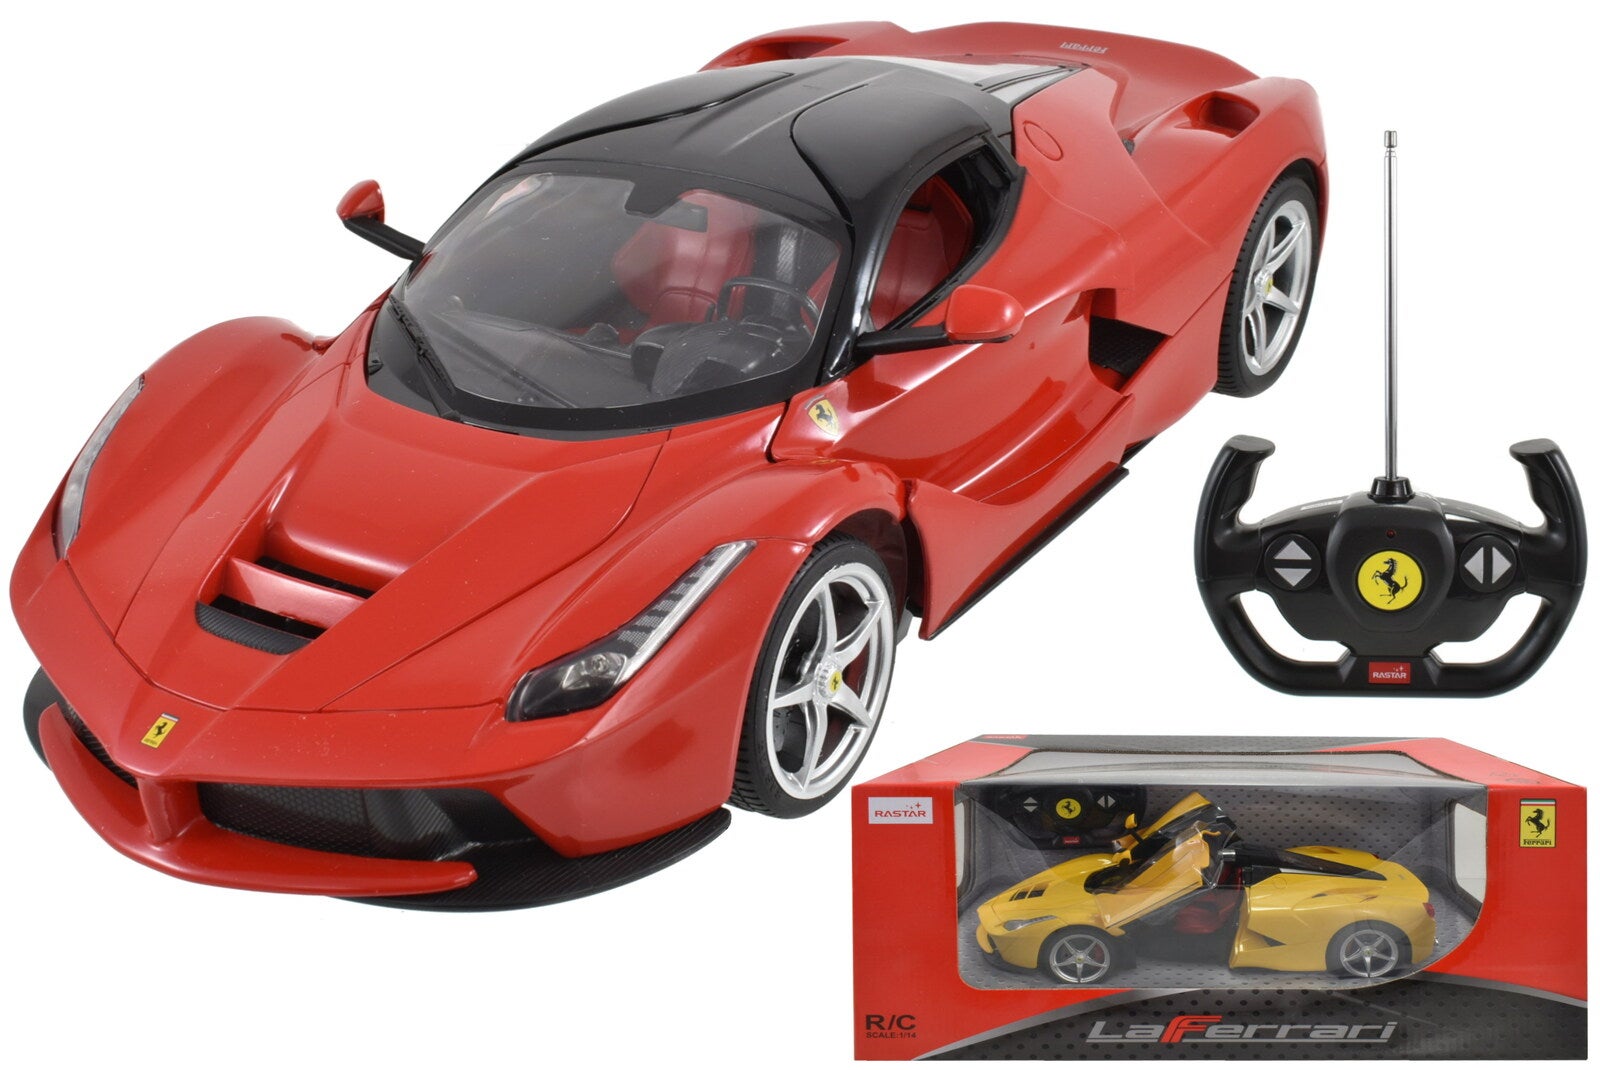 Ferrari Laferrari Remote Control Racing Car 1:14 | Buy RC Cars ...